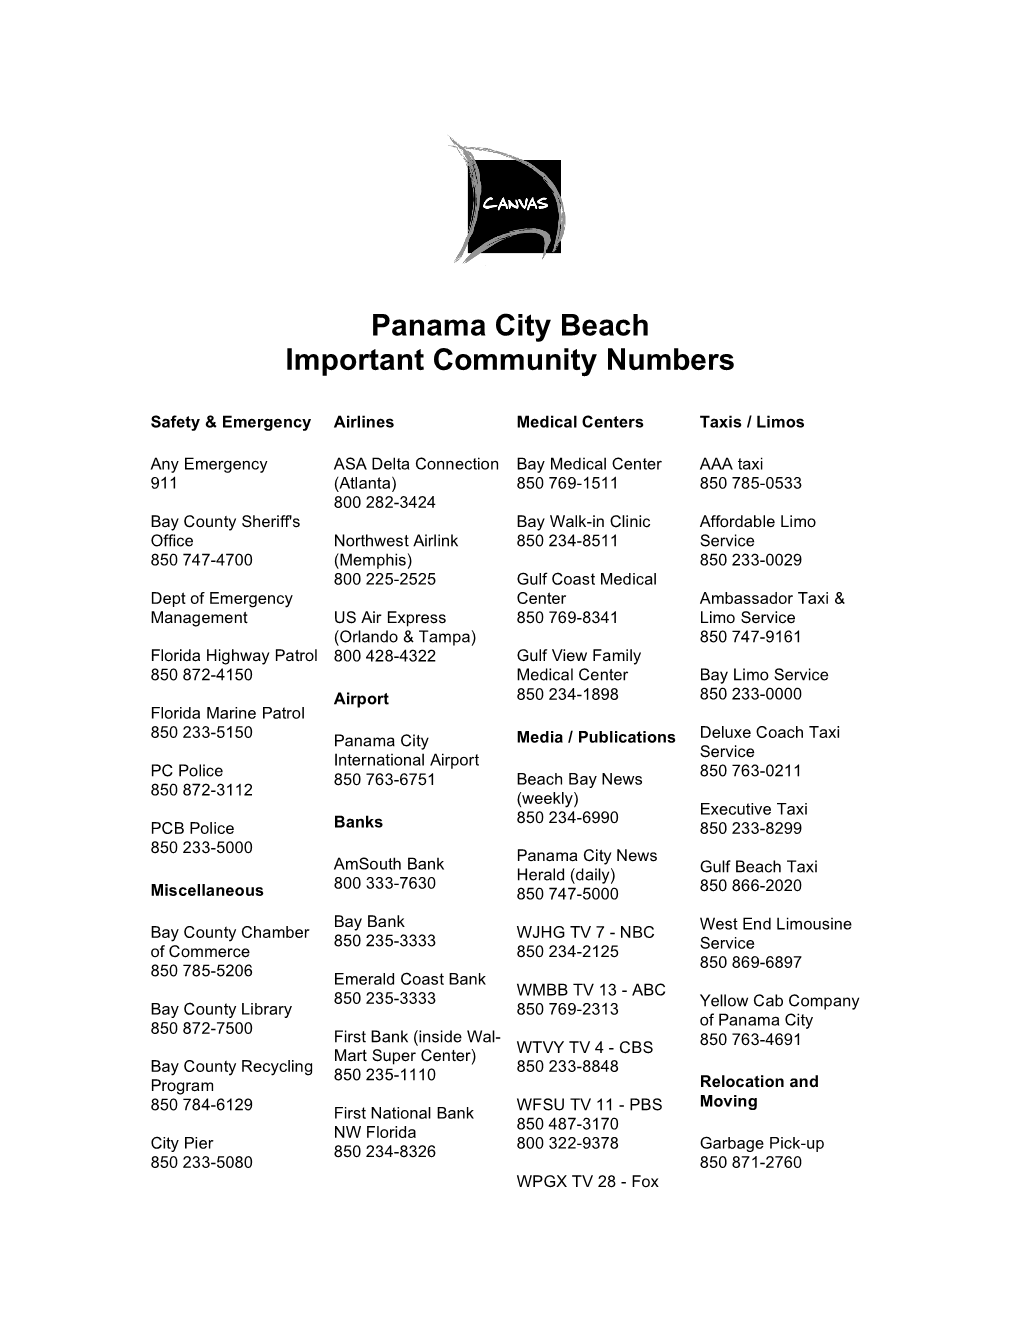 Panama City Beach Important Community Numbers